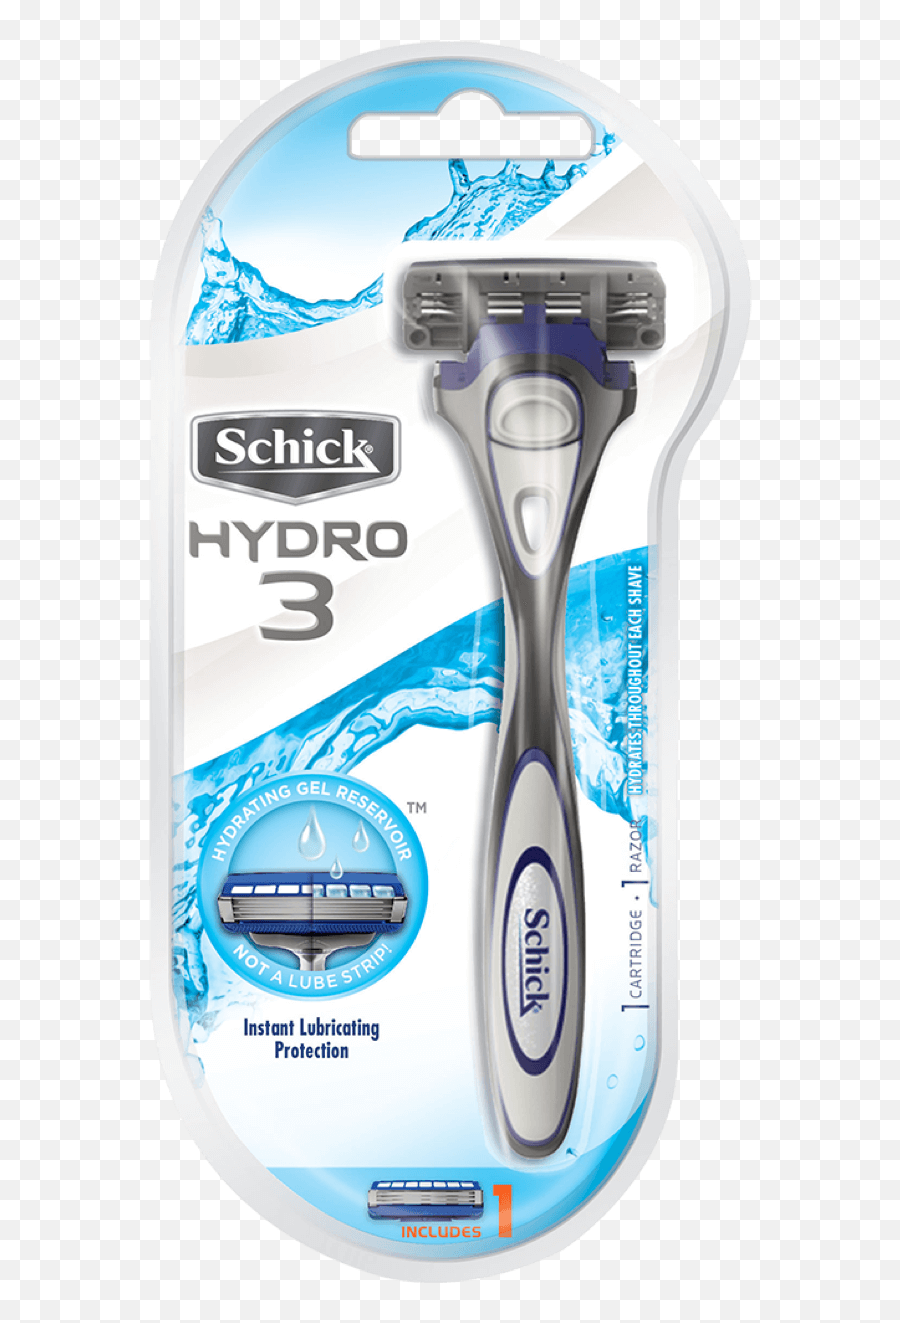 Schick Hydro 3 Razor Schick Hydro Au Emoji,Razor Blade Png